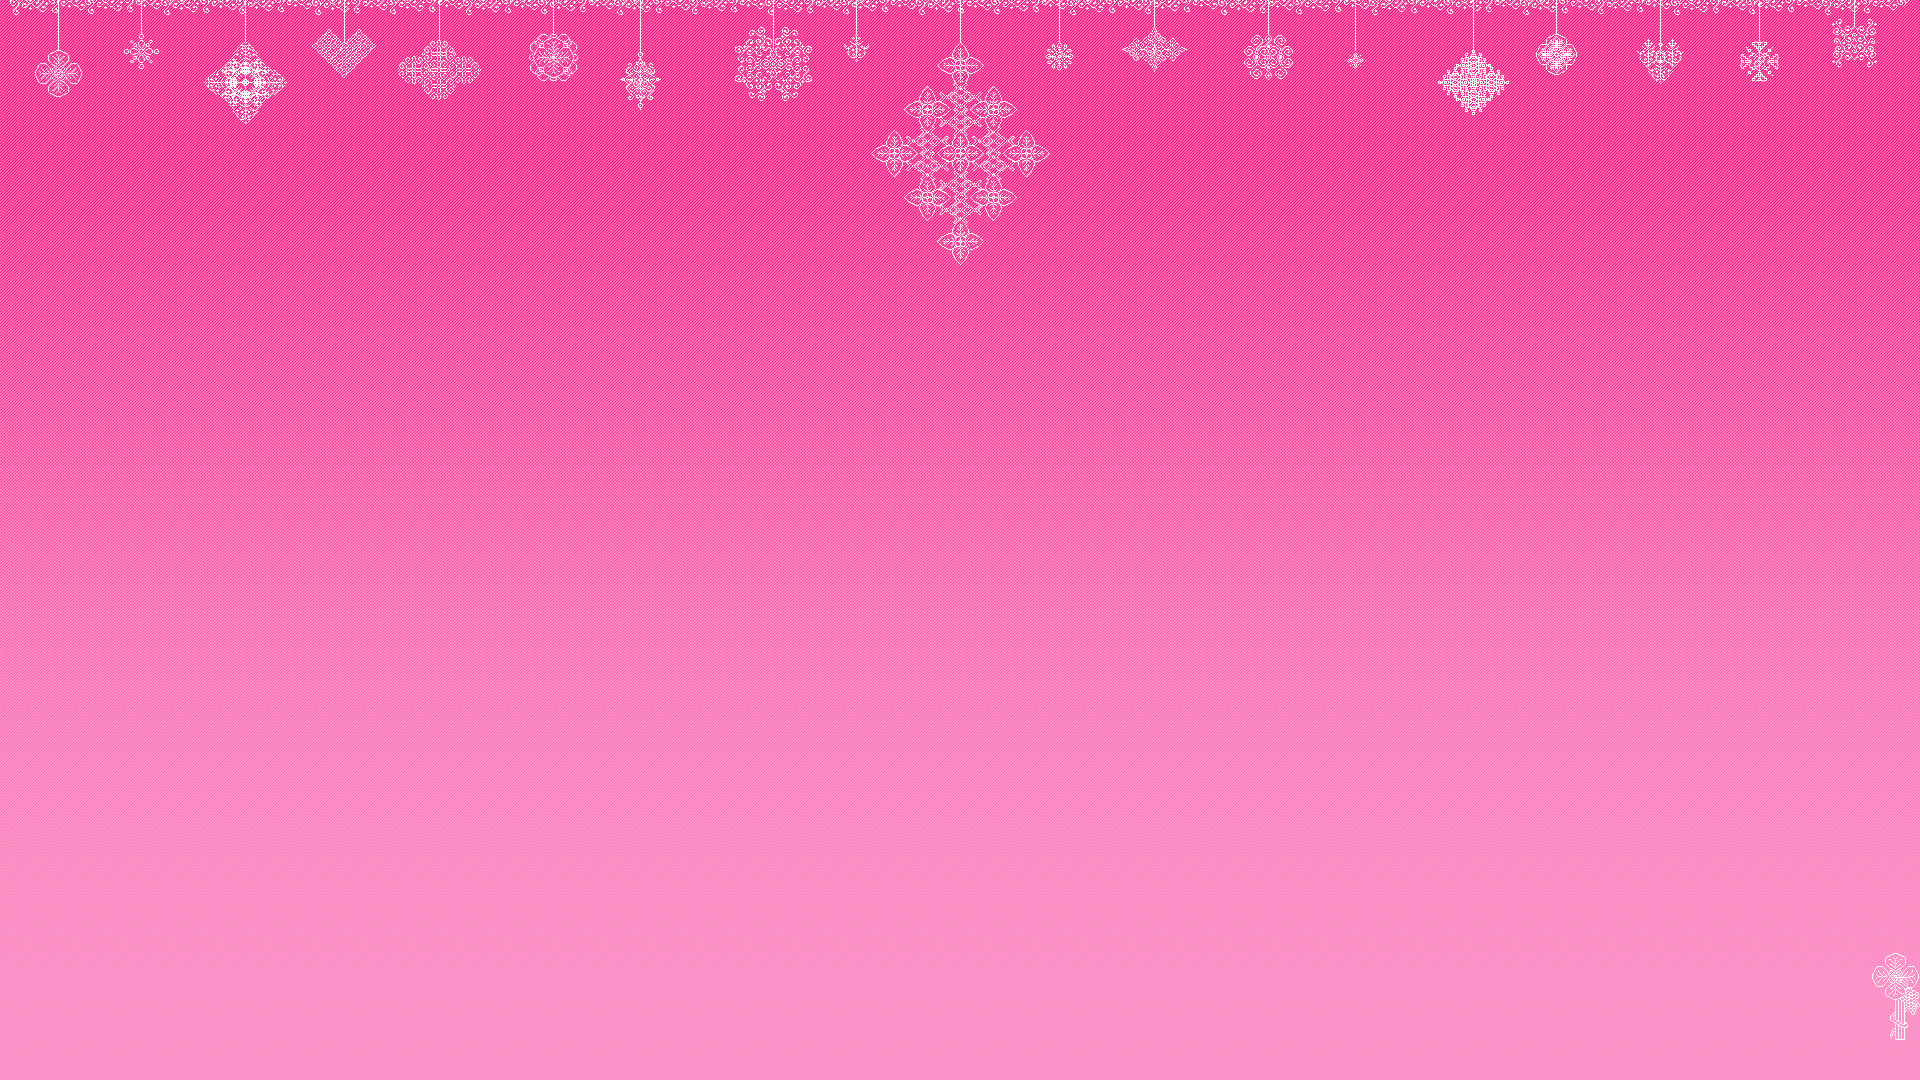 Pink Pixel Wallpaper Full Desktop By Cupcakekitten20 On